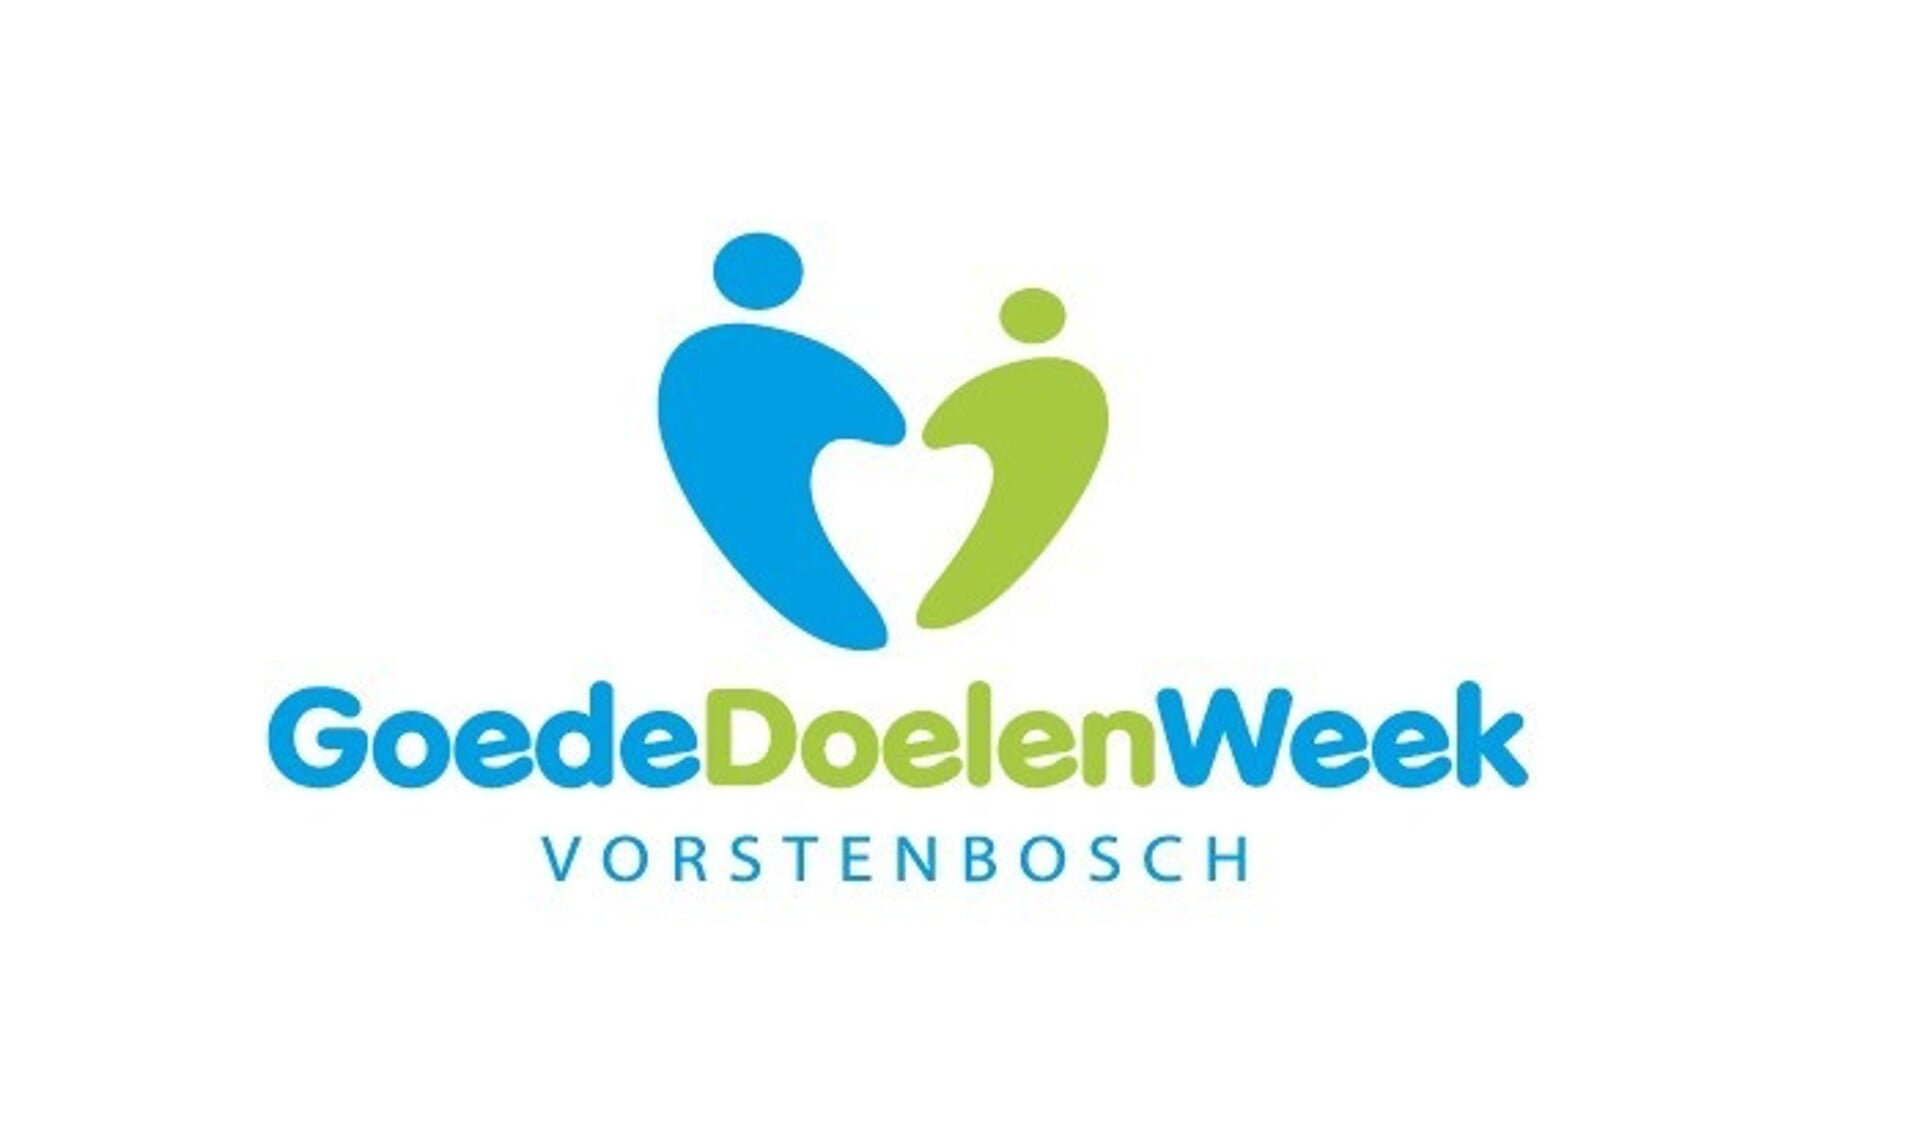 Goede Doelen Week Vorstenbosch 2018 succesvol!